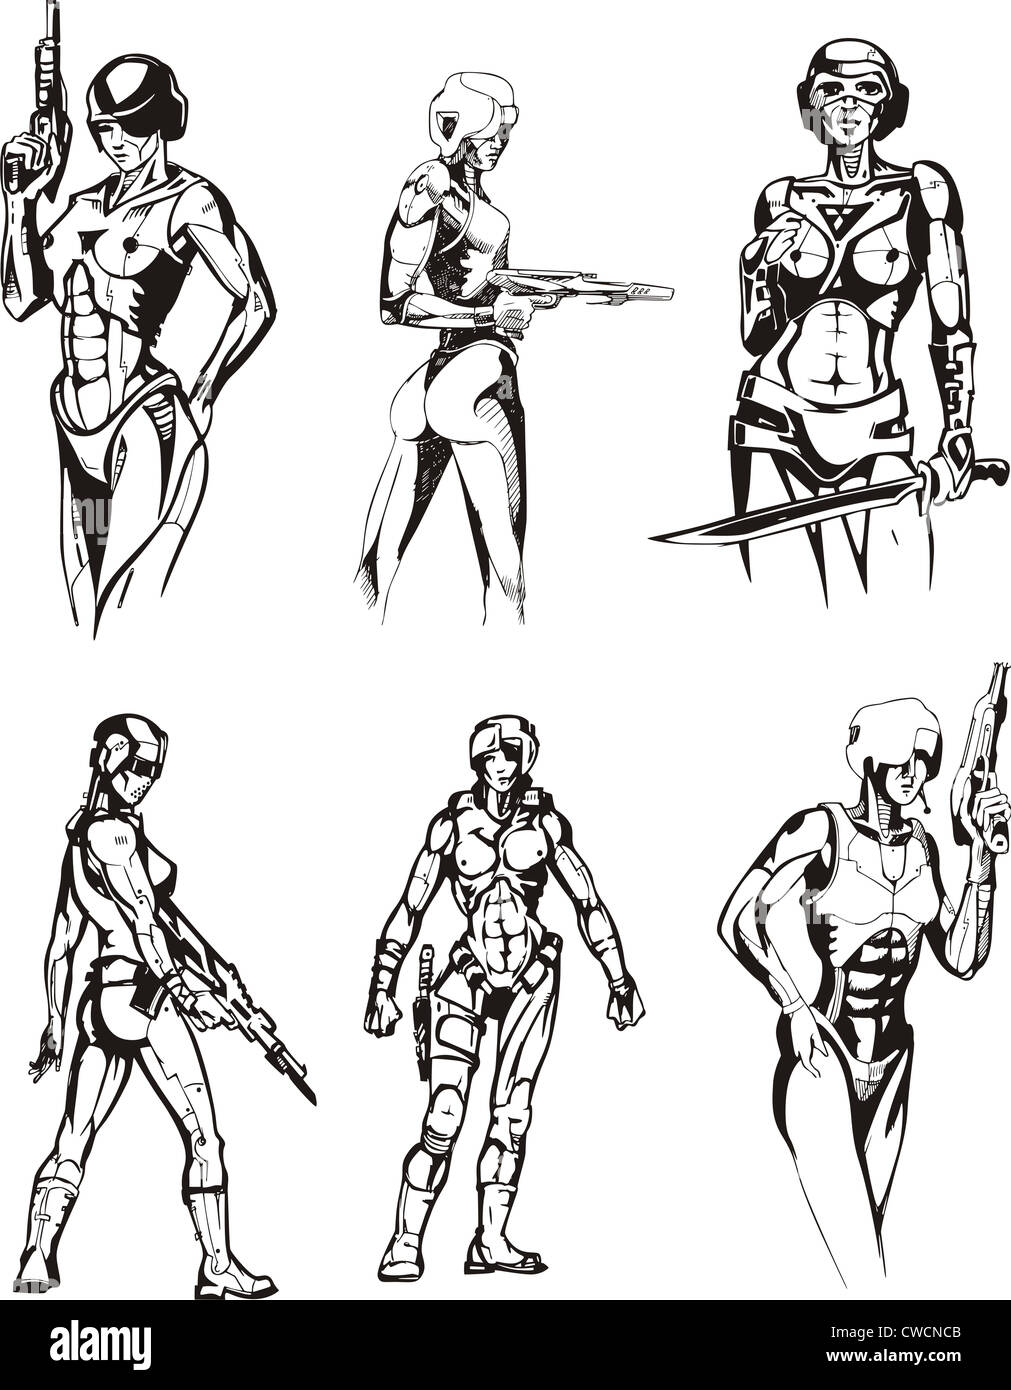 Amazon Cyborgs. Set of black and white vector illustrations. Stock Photo